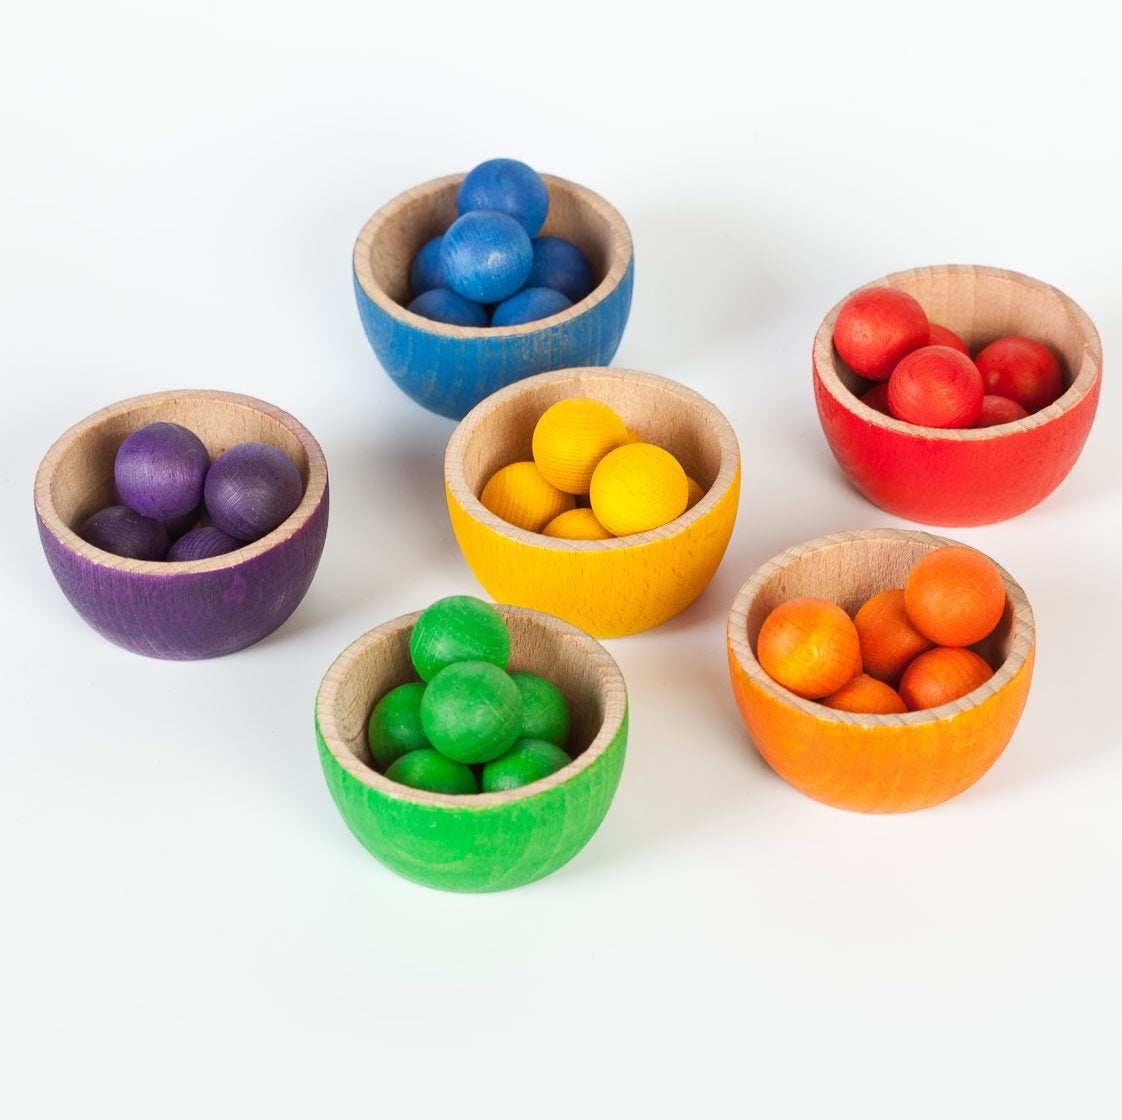 grapat-sorting-bowls-montessori